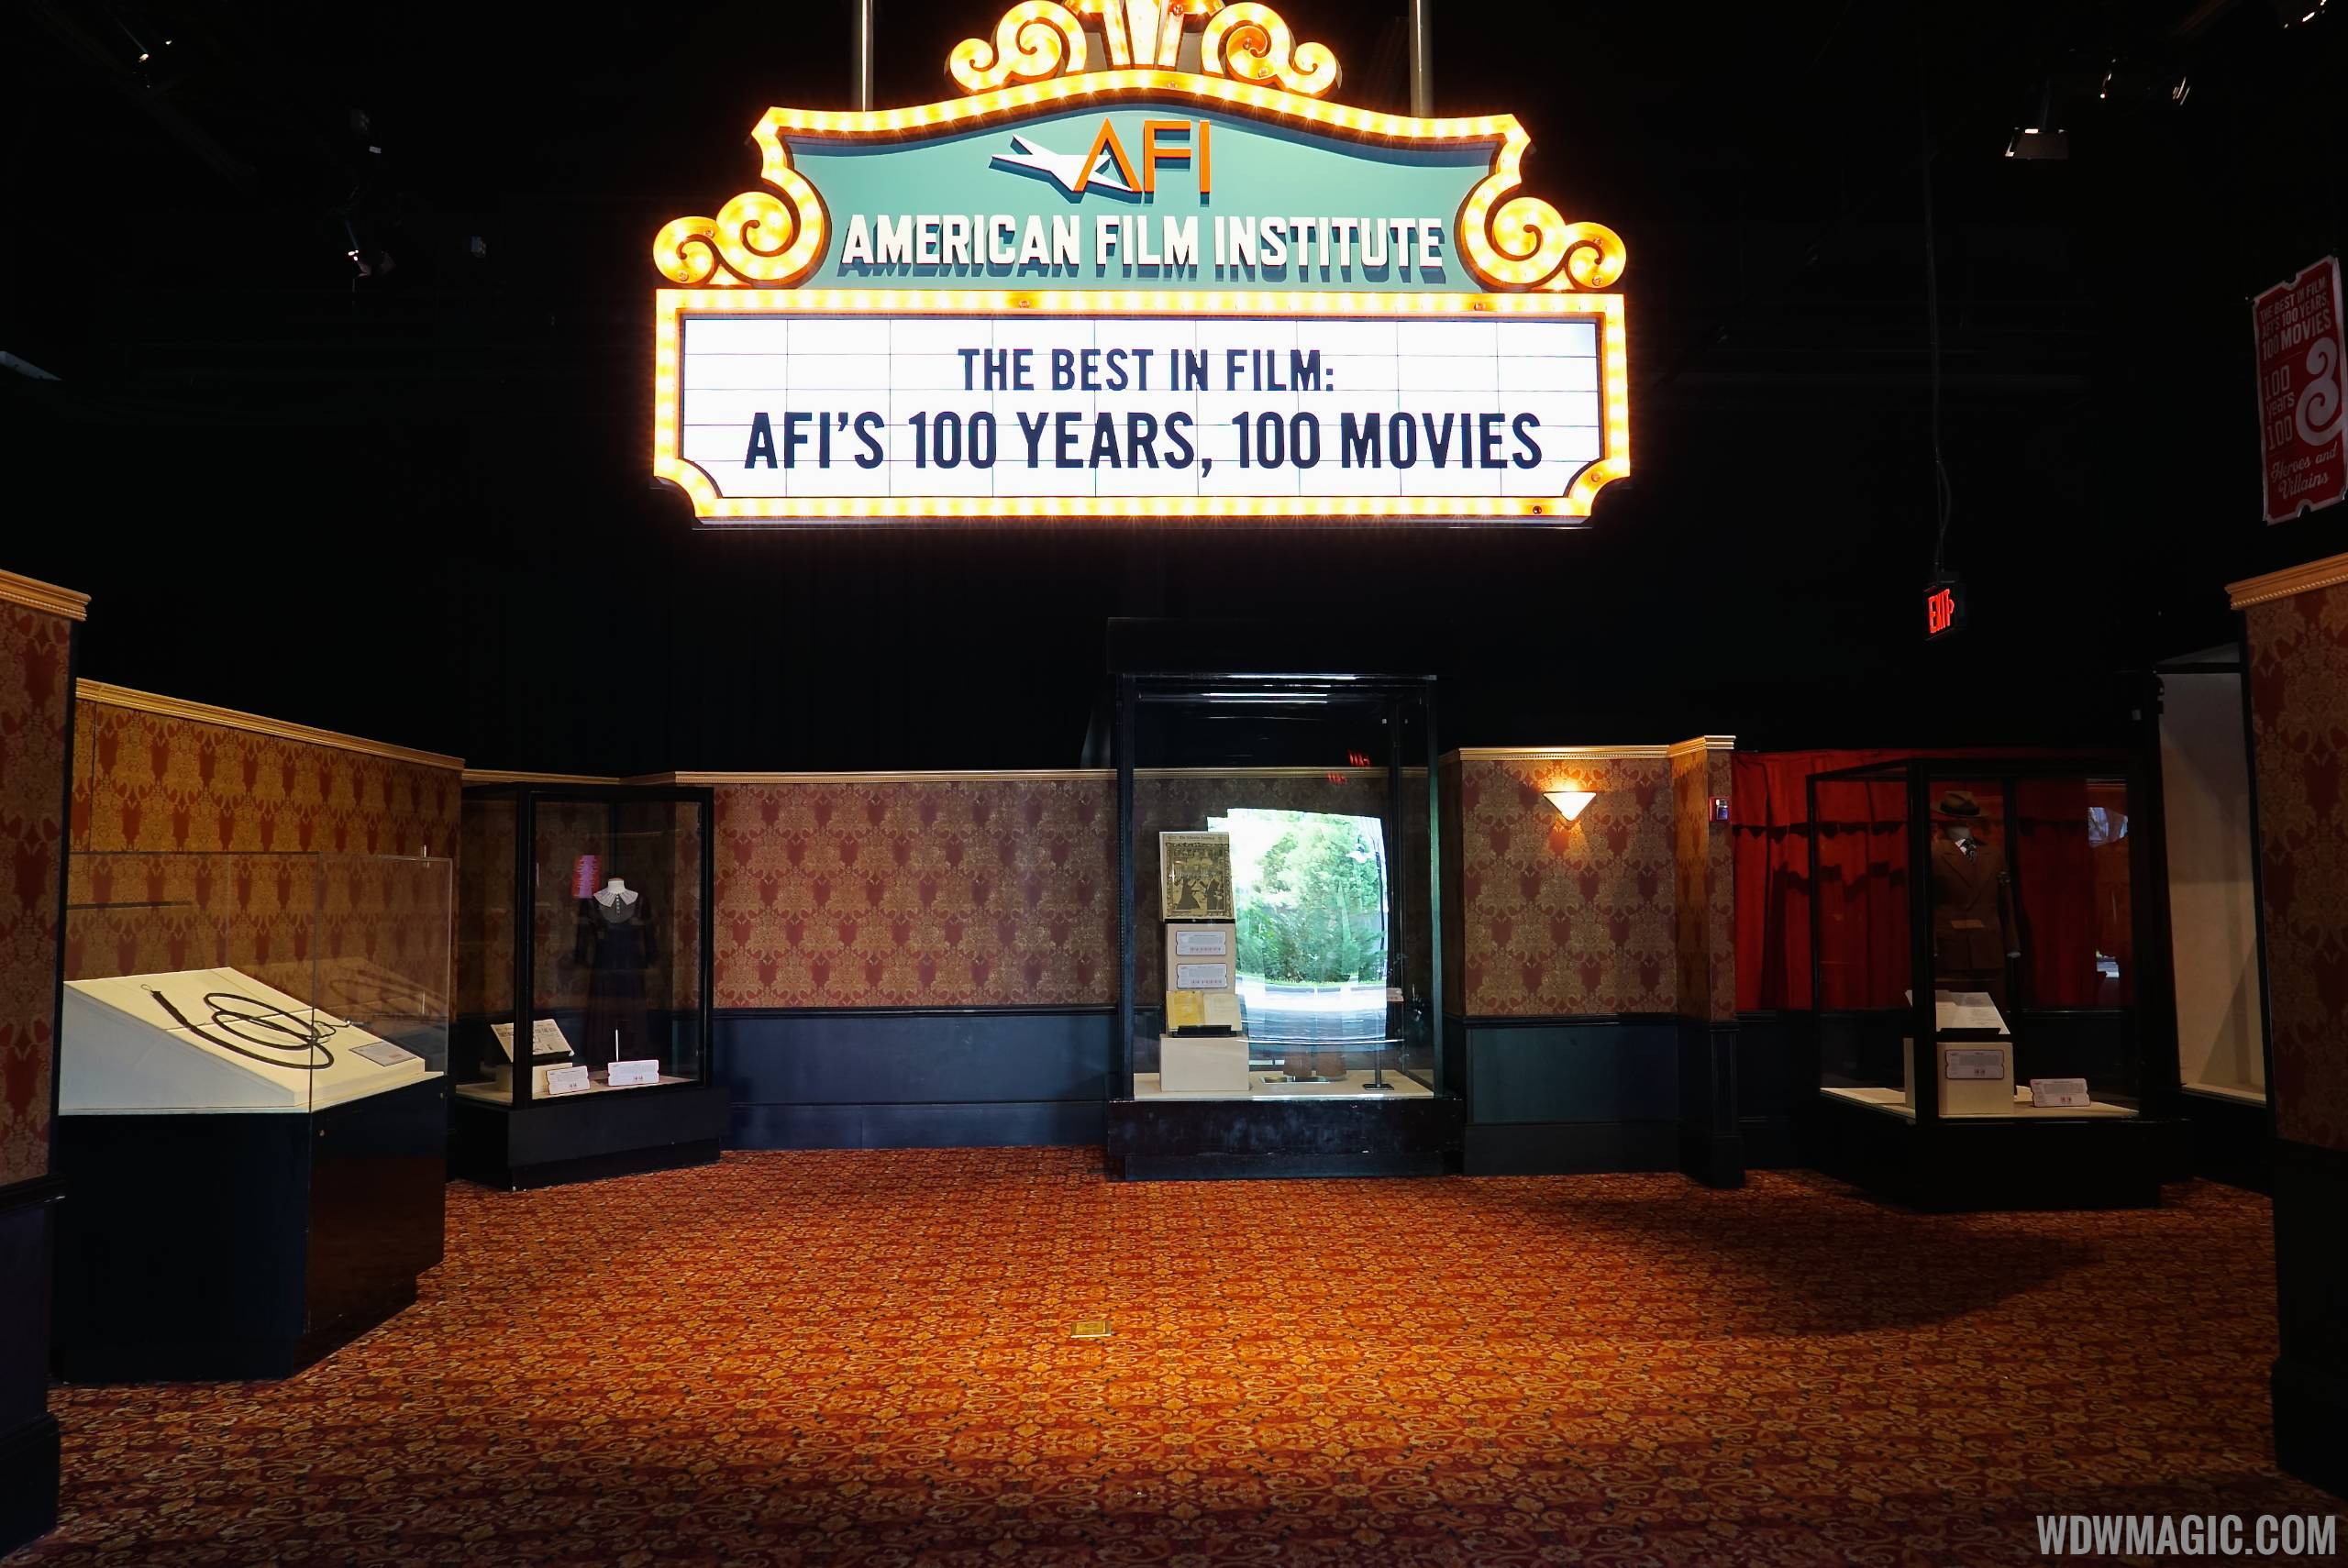 American Film Institute exhibit - Inside the main entrance